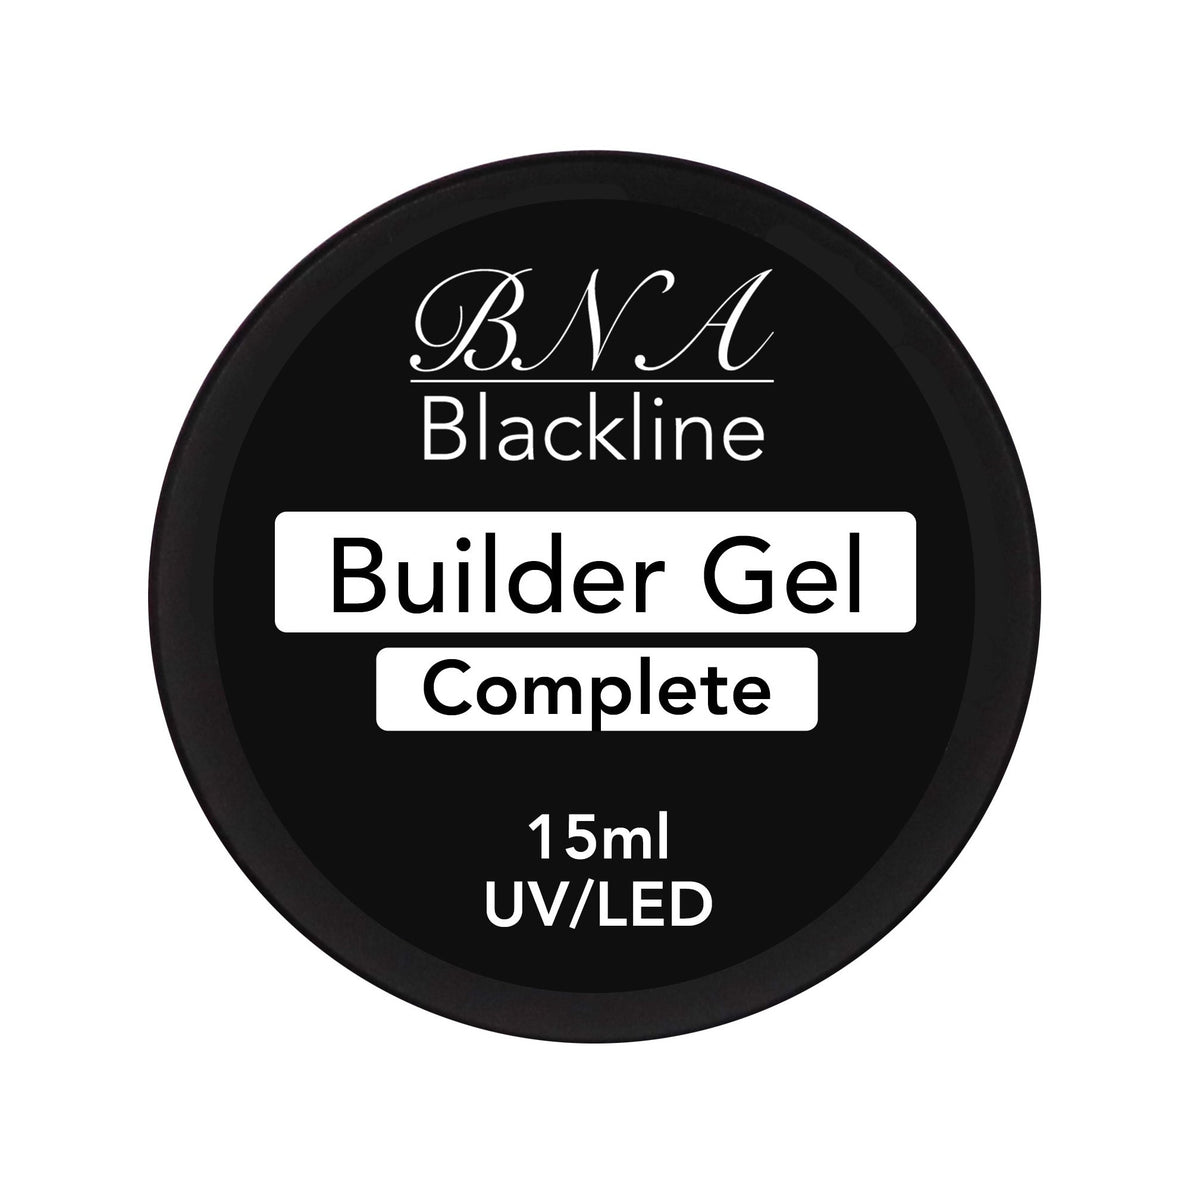 Builder Gel Complete 15ml